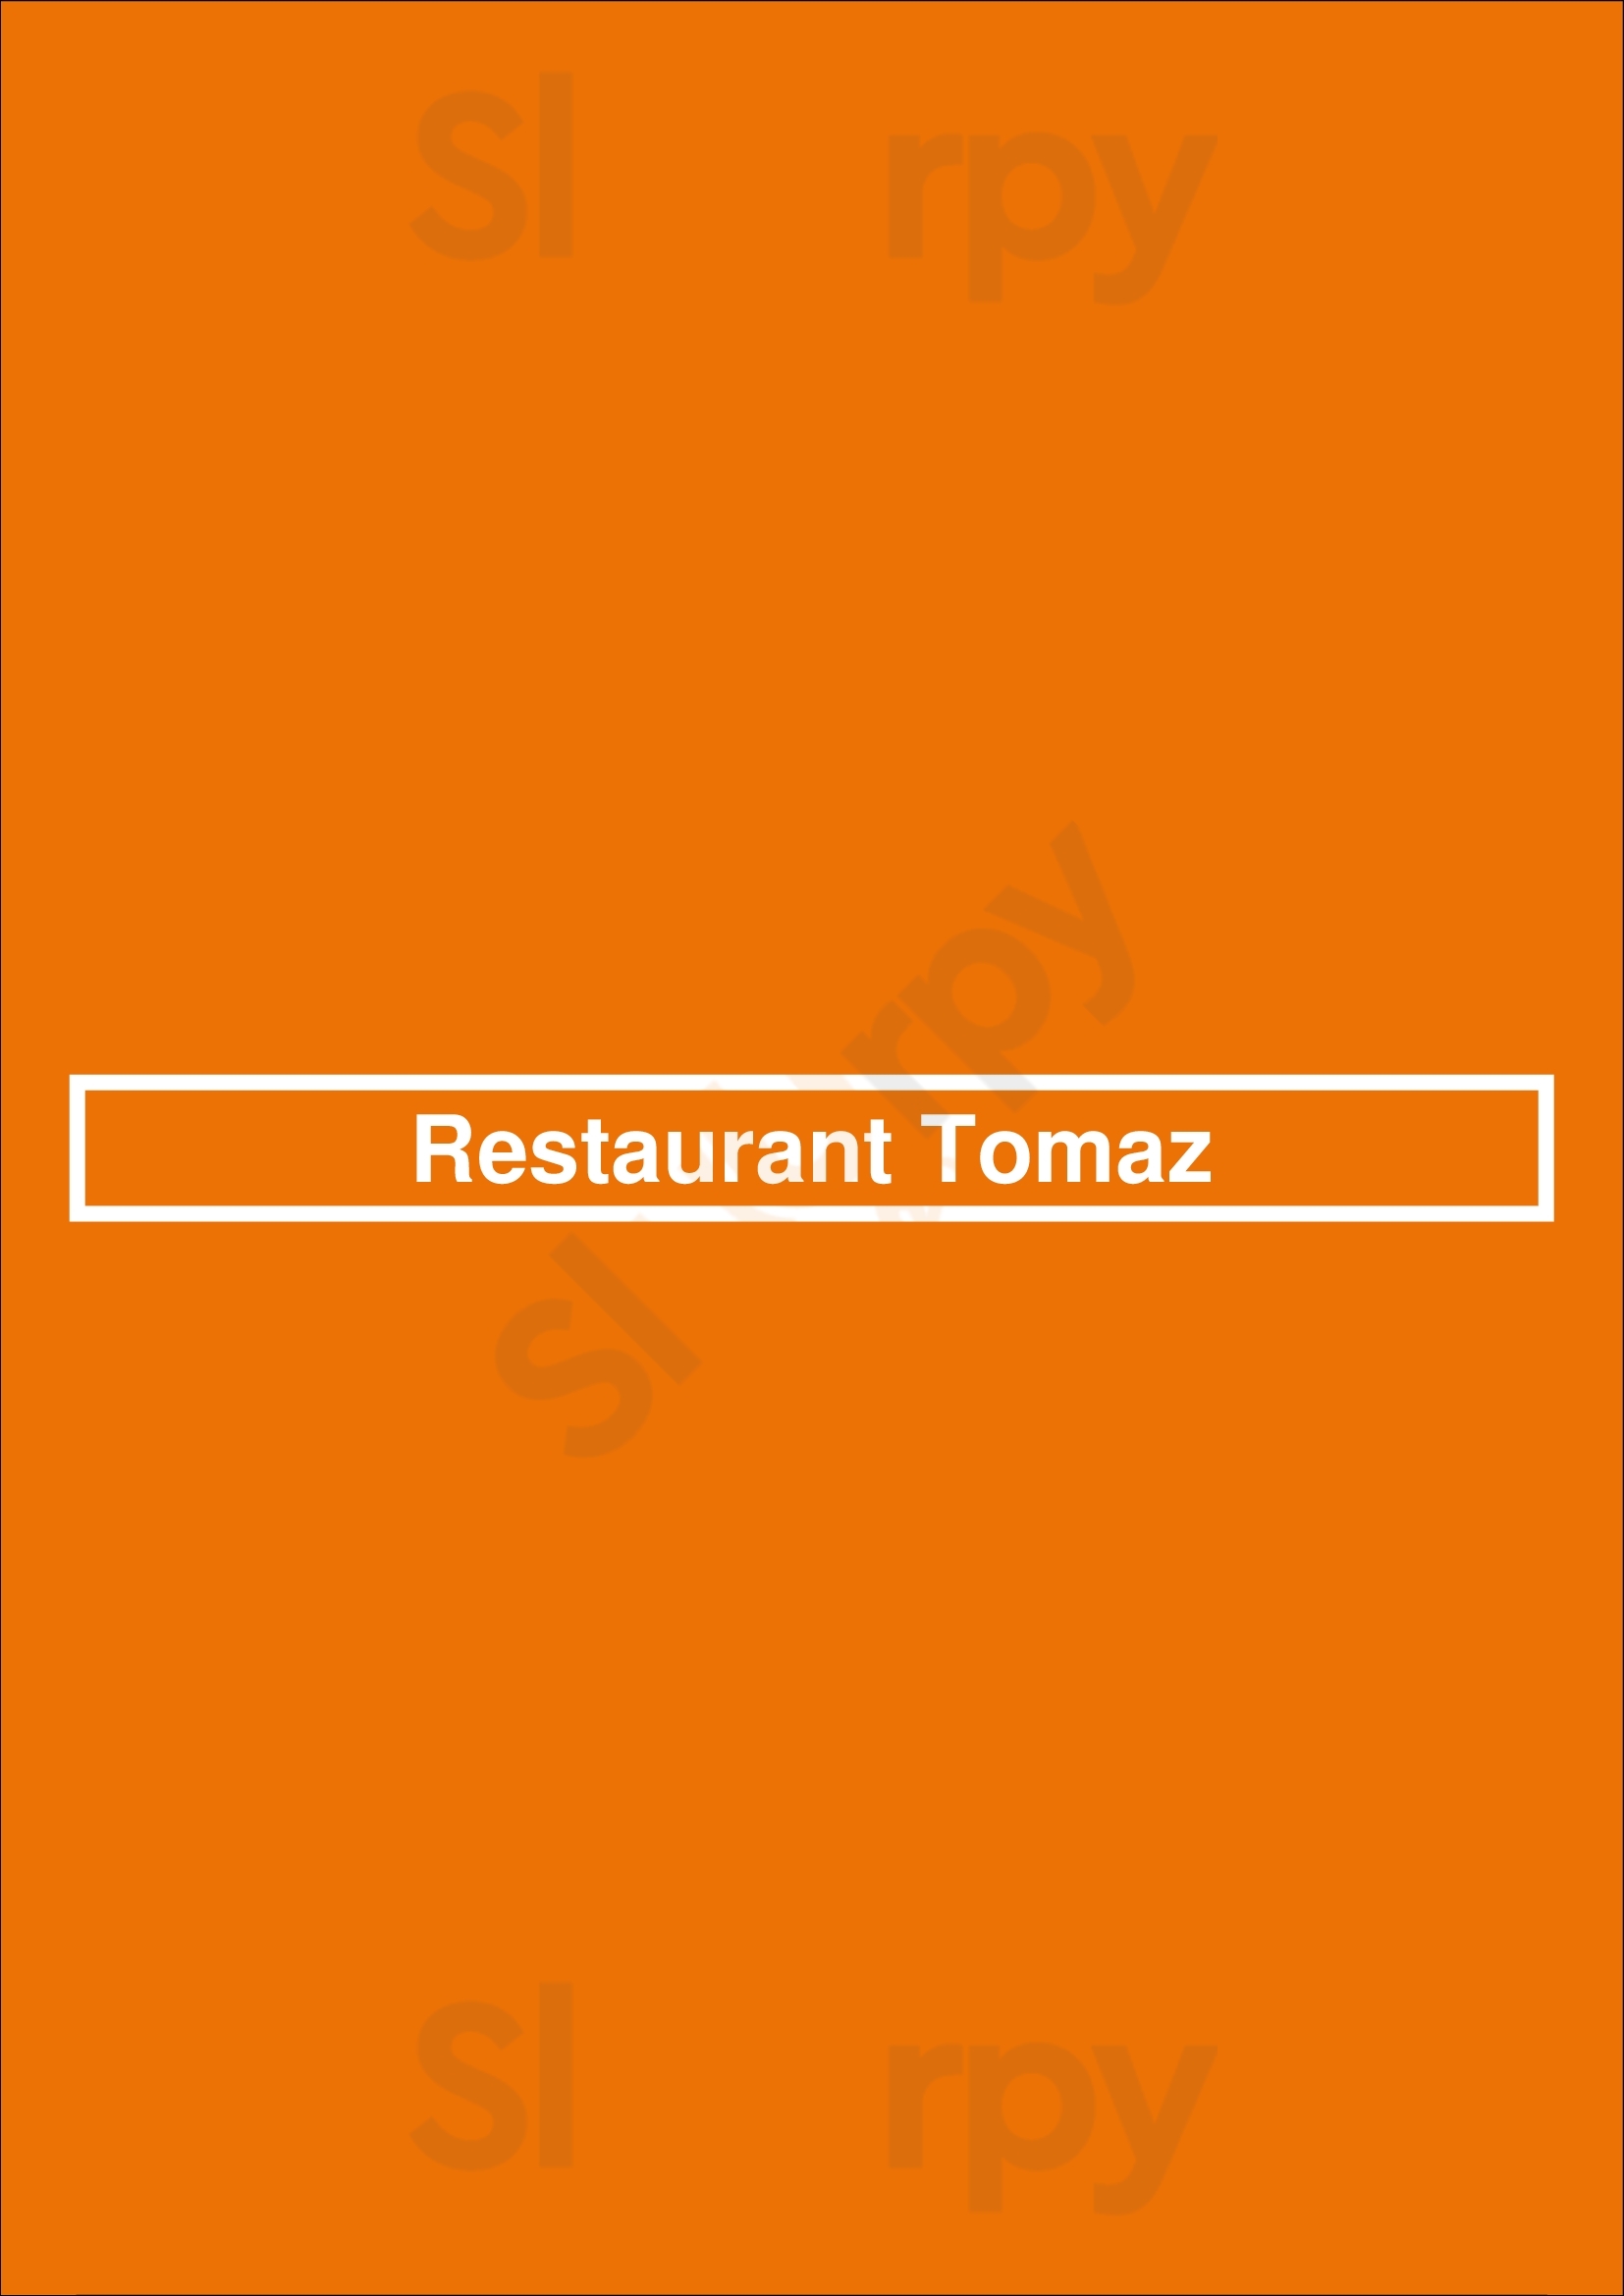 Restaurant Tomaz Amsterdam Menu - 1